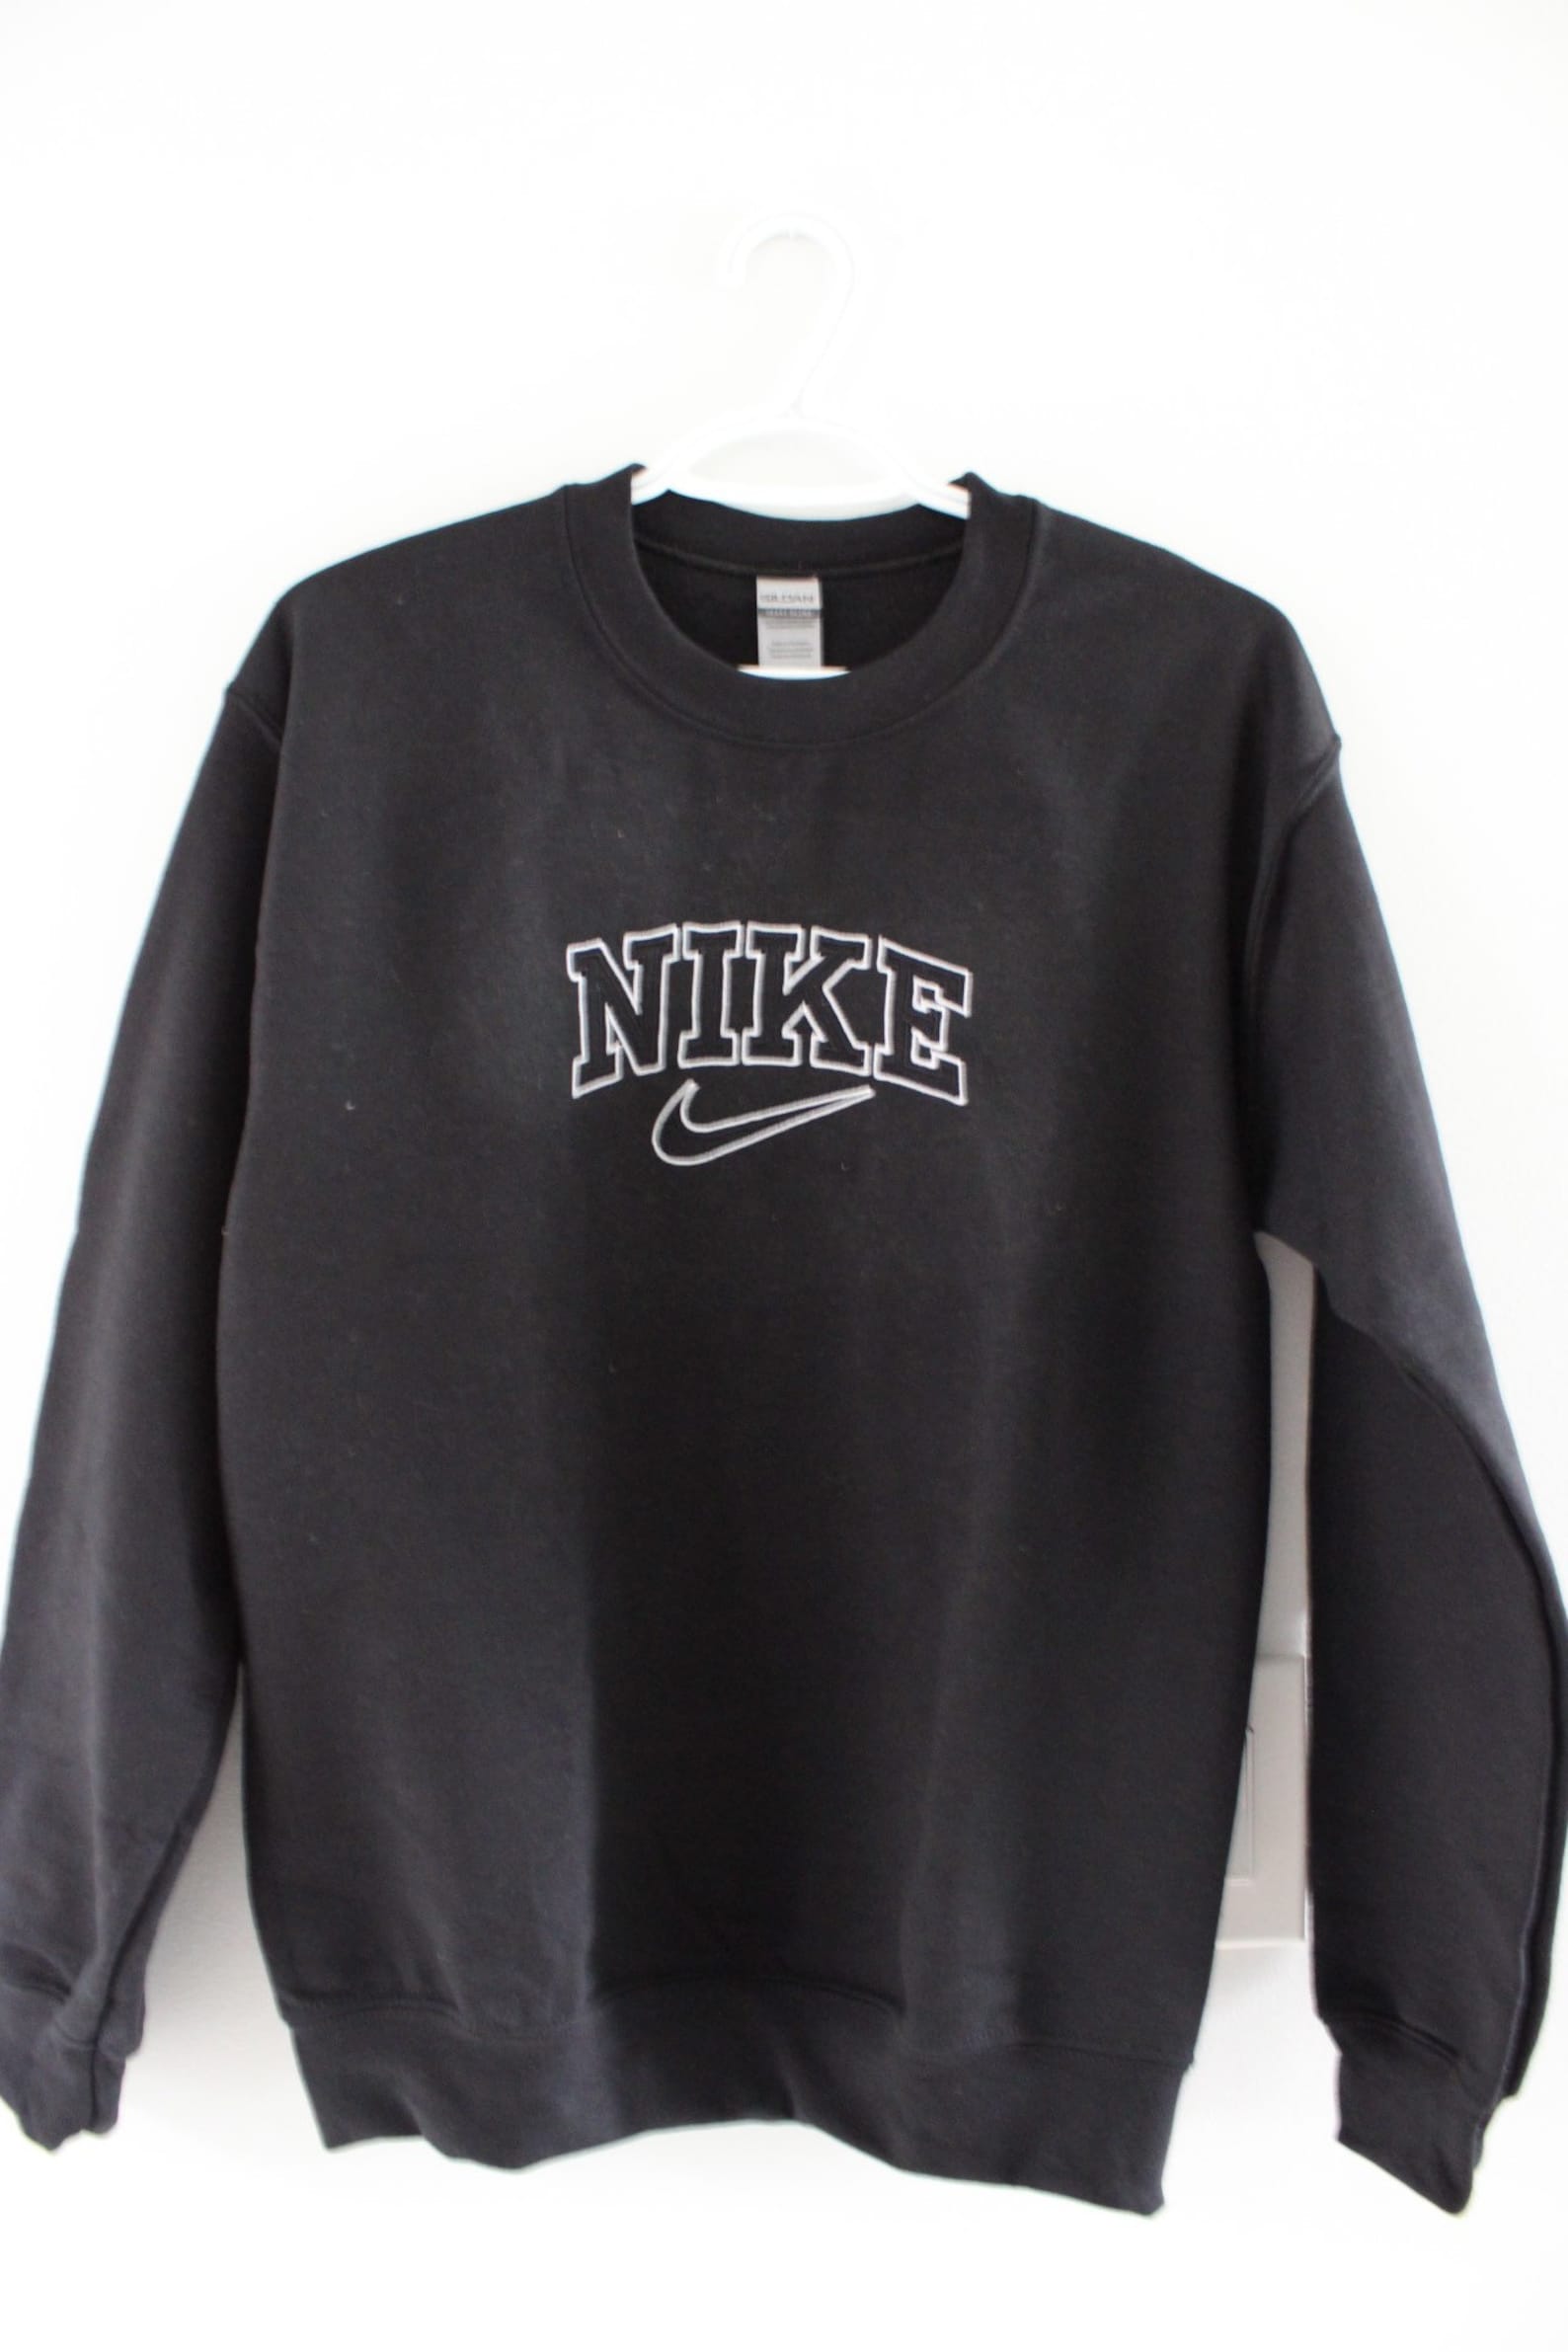 Embroidered Nike Inspired Crewneck Nike Sweatshirt Vintage | Etsy